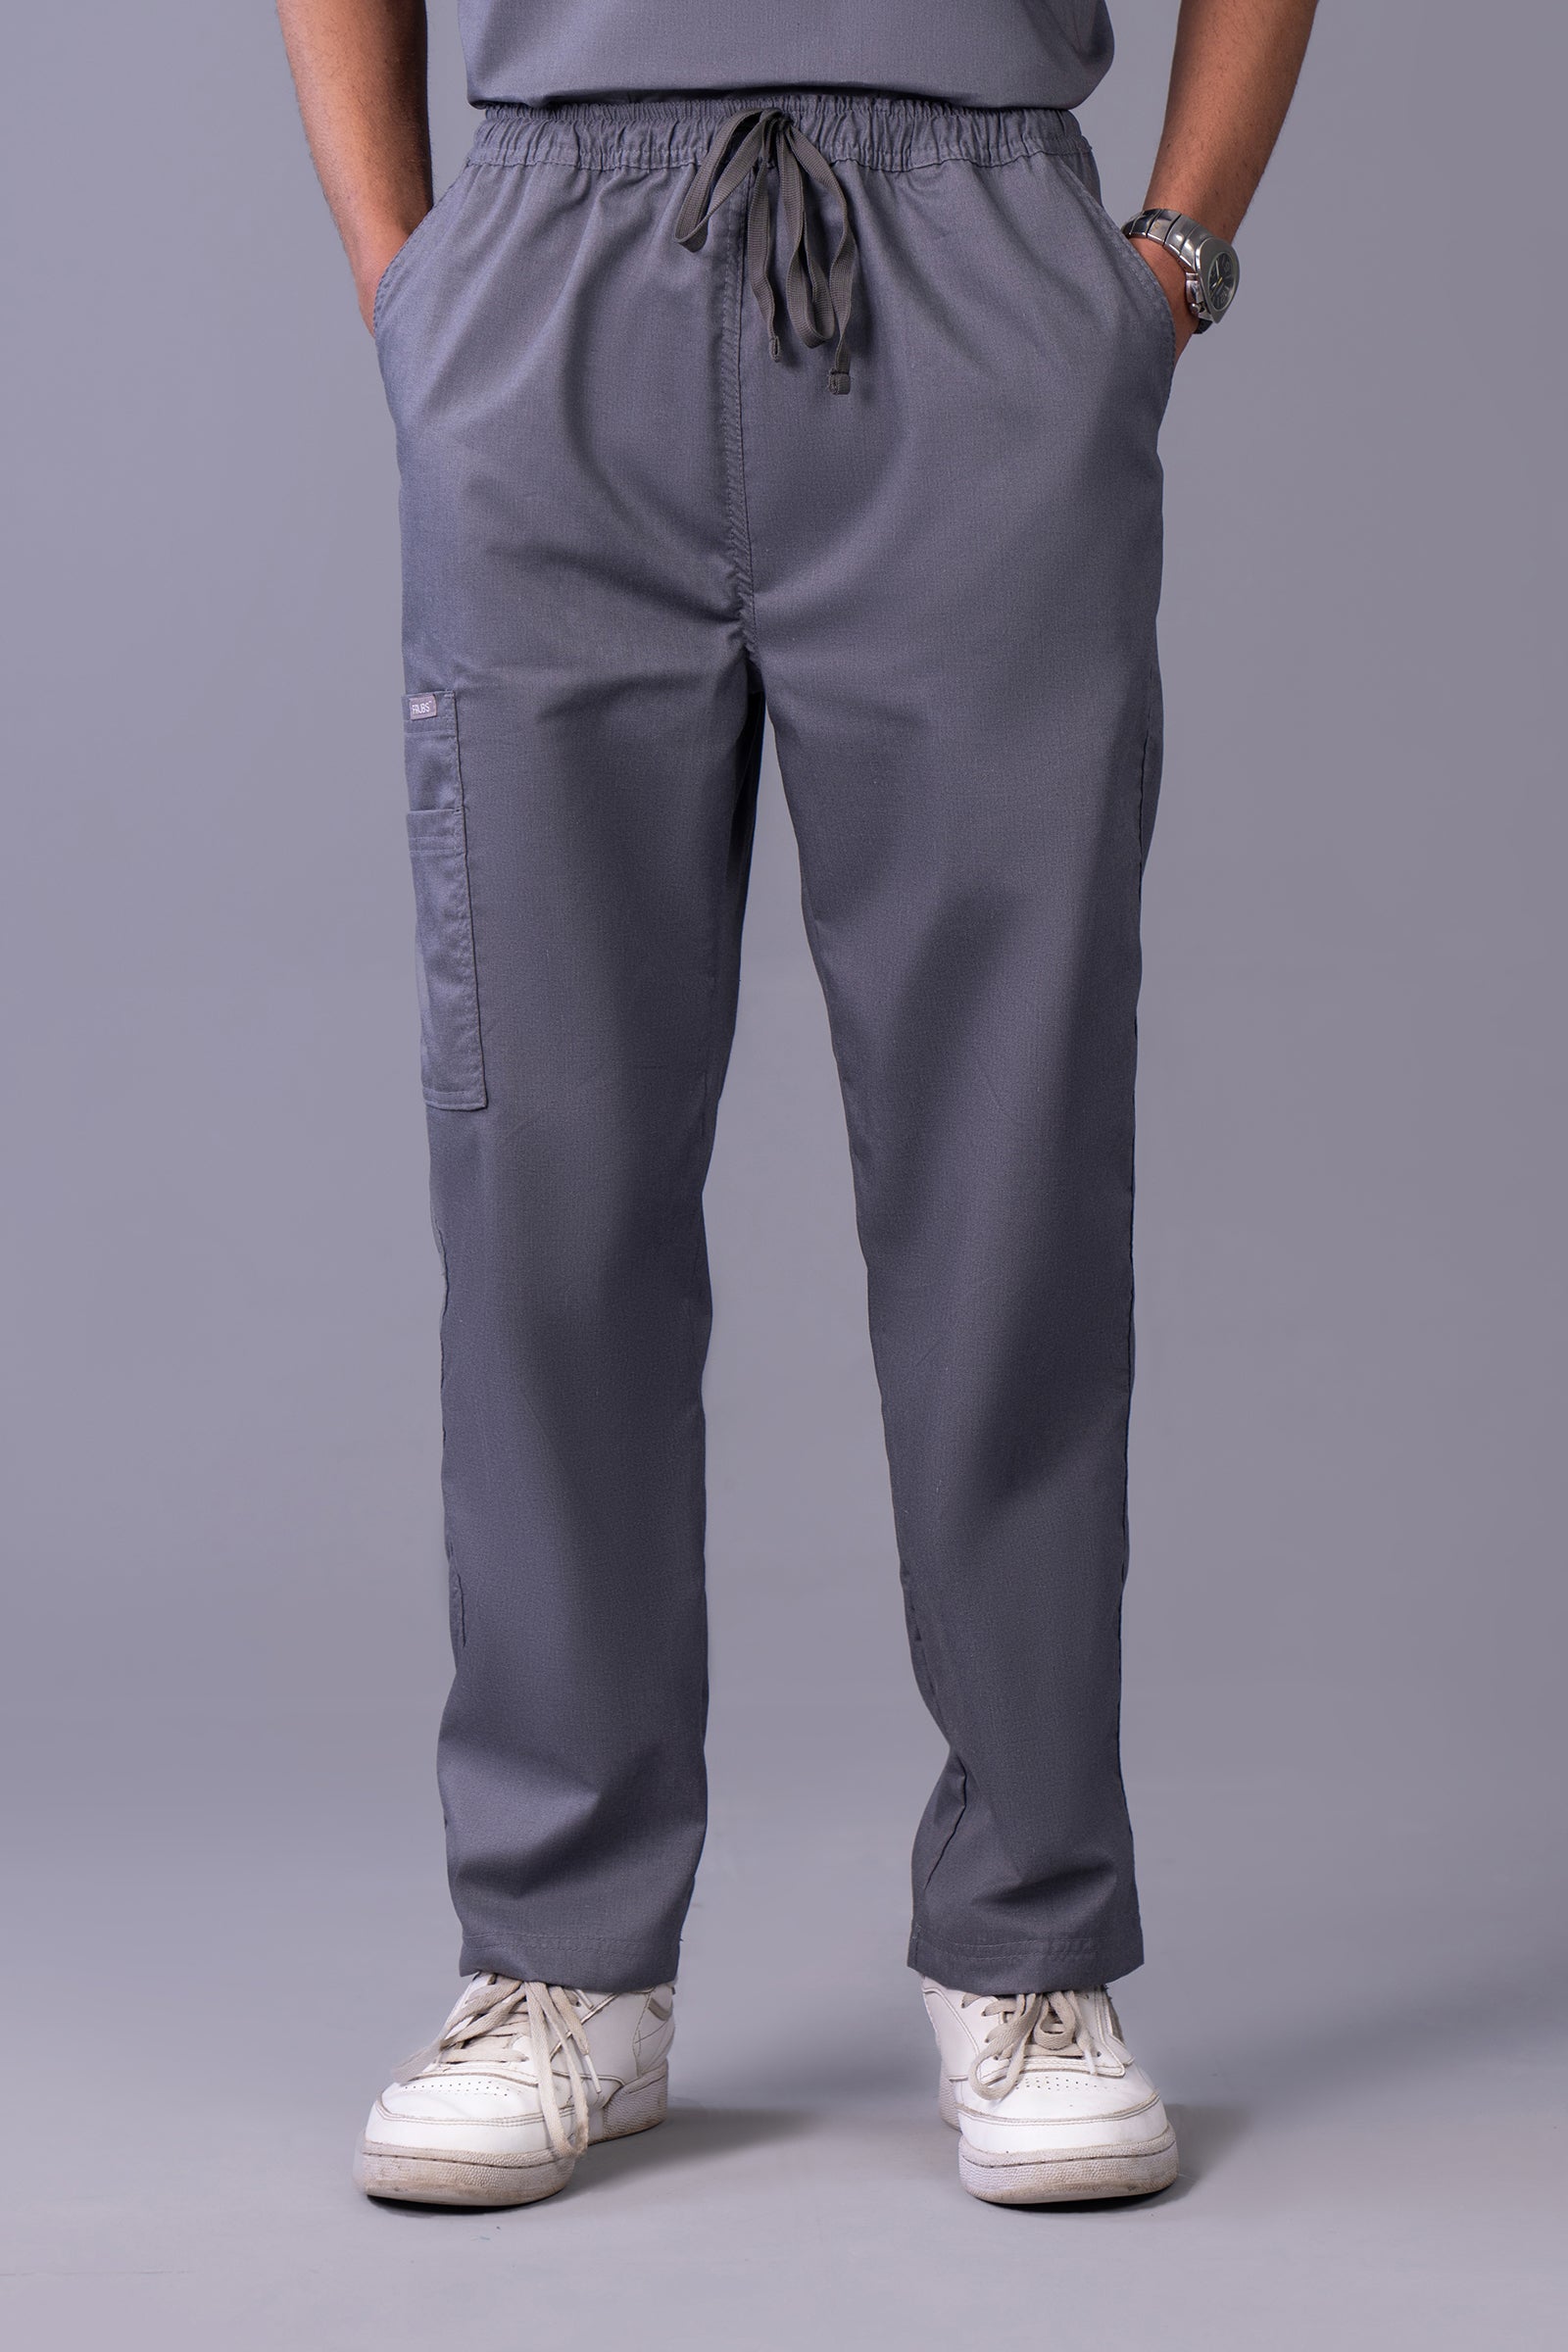 Grey unisex trousers